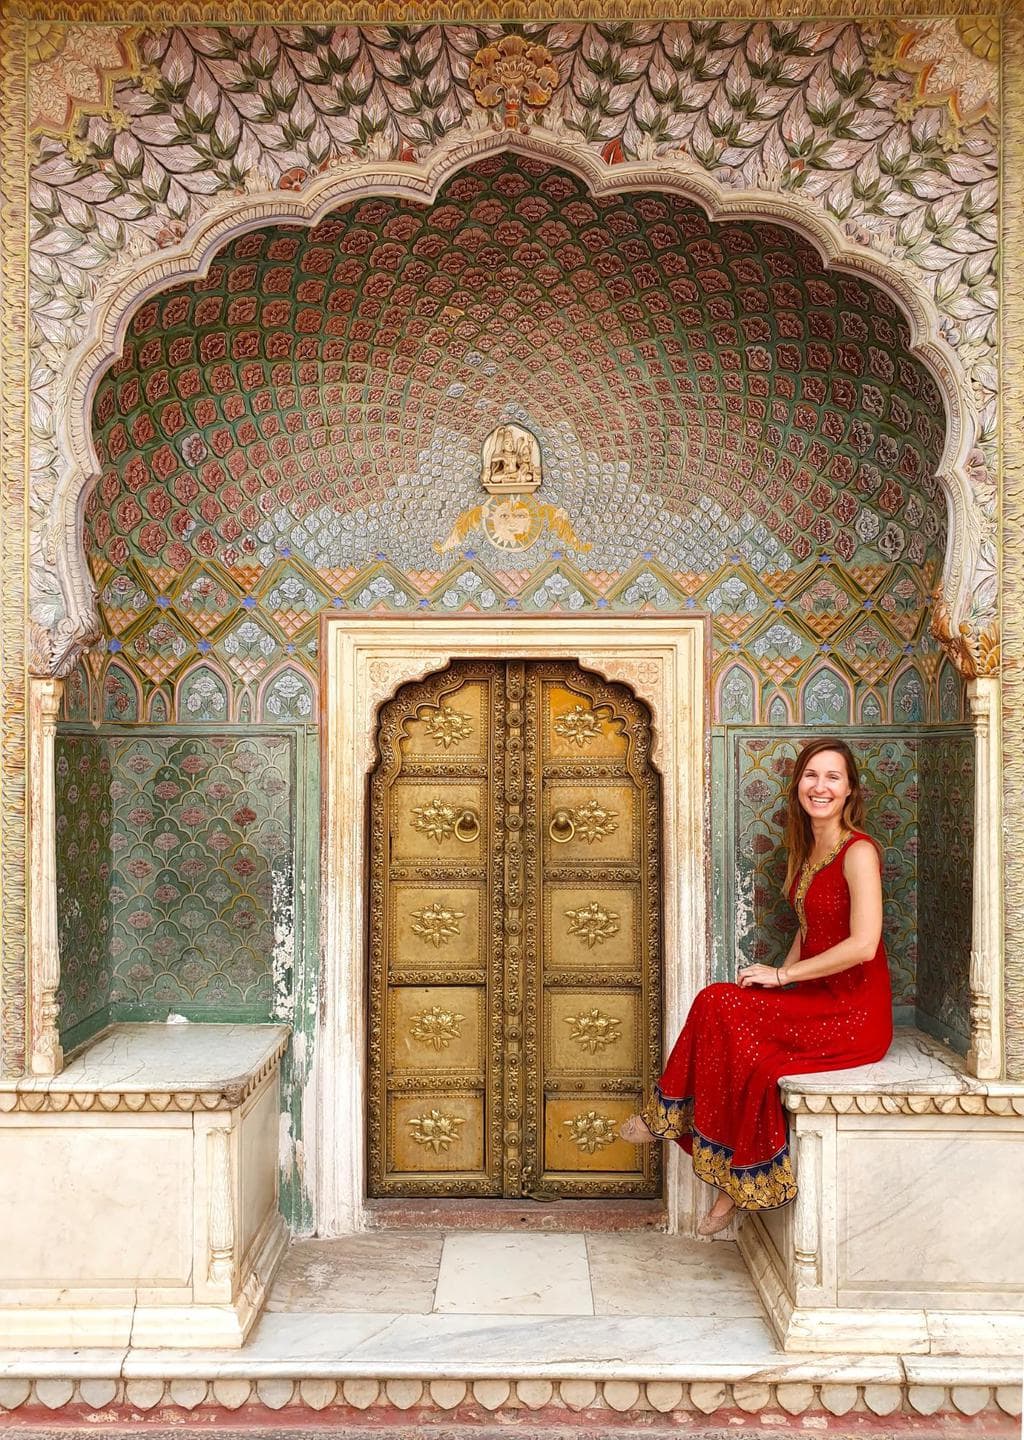 The beautiful gates at Jaipur’s City palace 03